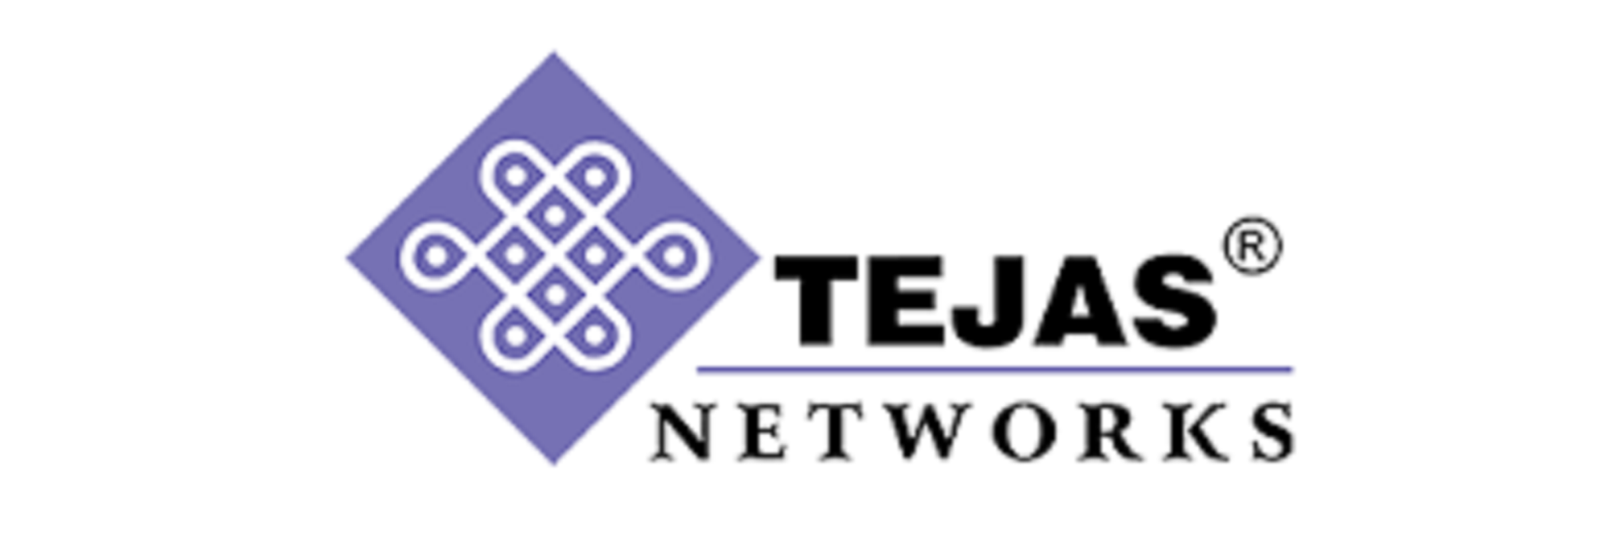 Tejas Networks Recruitment